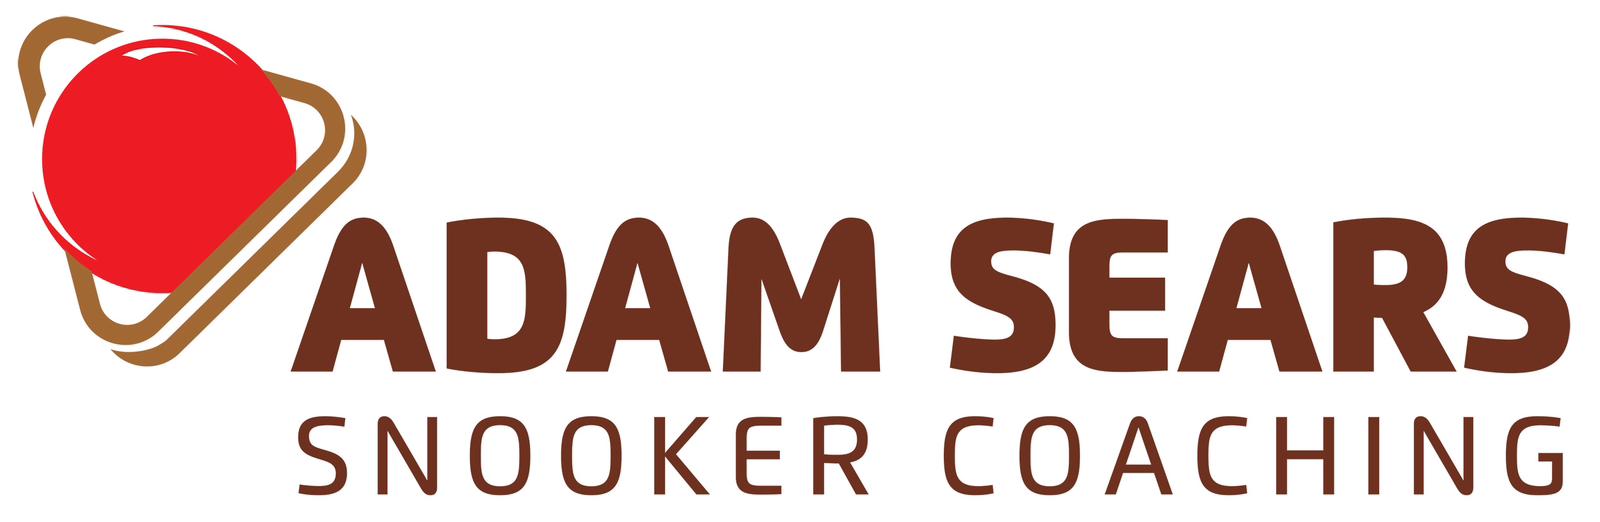 Adam Sears Snooker Coaching